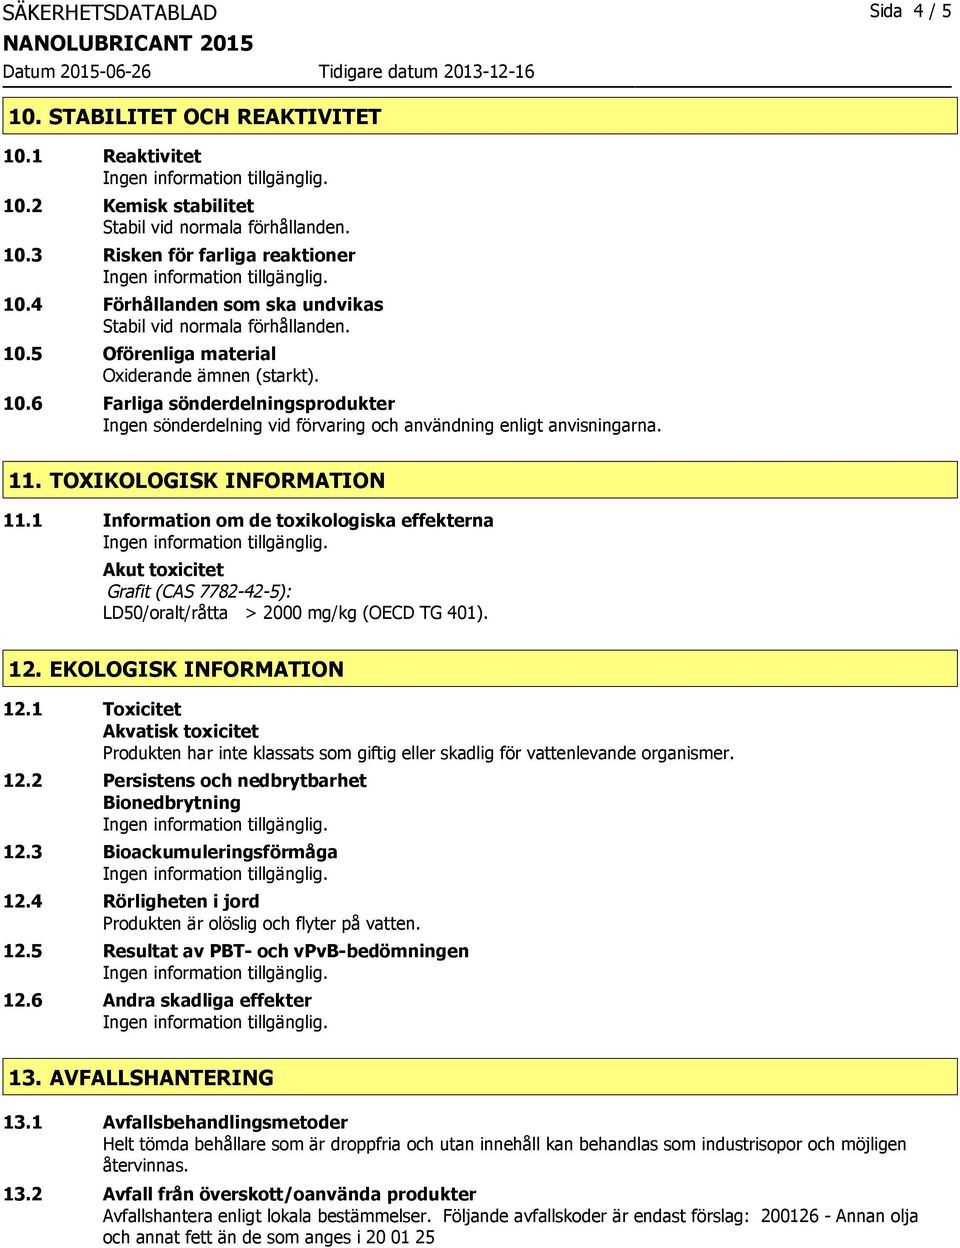 11. TOXIKOLOGISK INFORMATION 11.1 Information om de toxikologiska effekterna Akut toxicitet Grafit (CAS 7782-42-5): LD50/oralt/råtta > 2000 mg/kg (OECD TG 401). 12. EKOLOGISK INFORMATION 12.